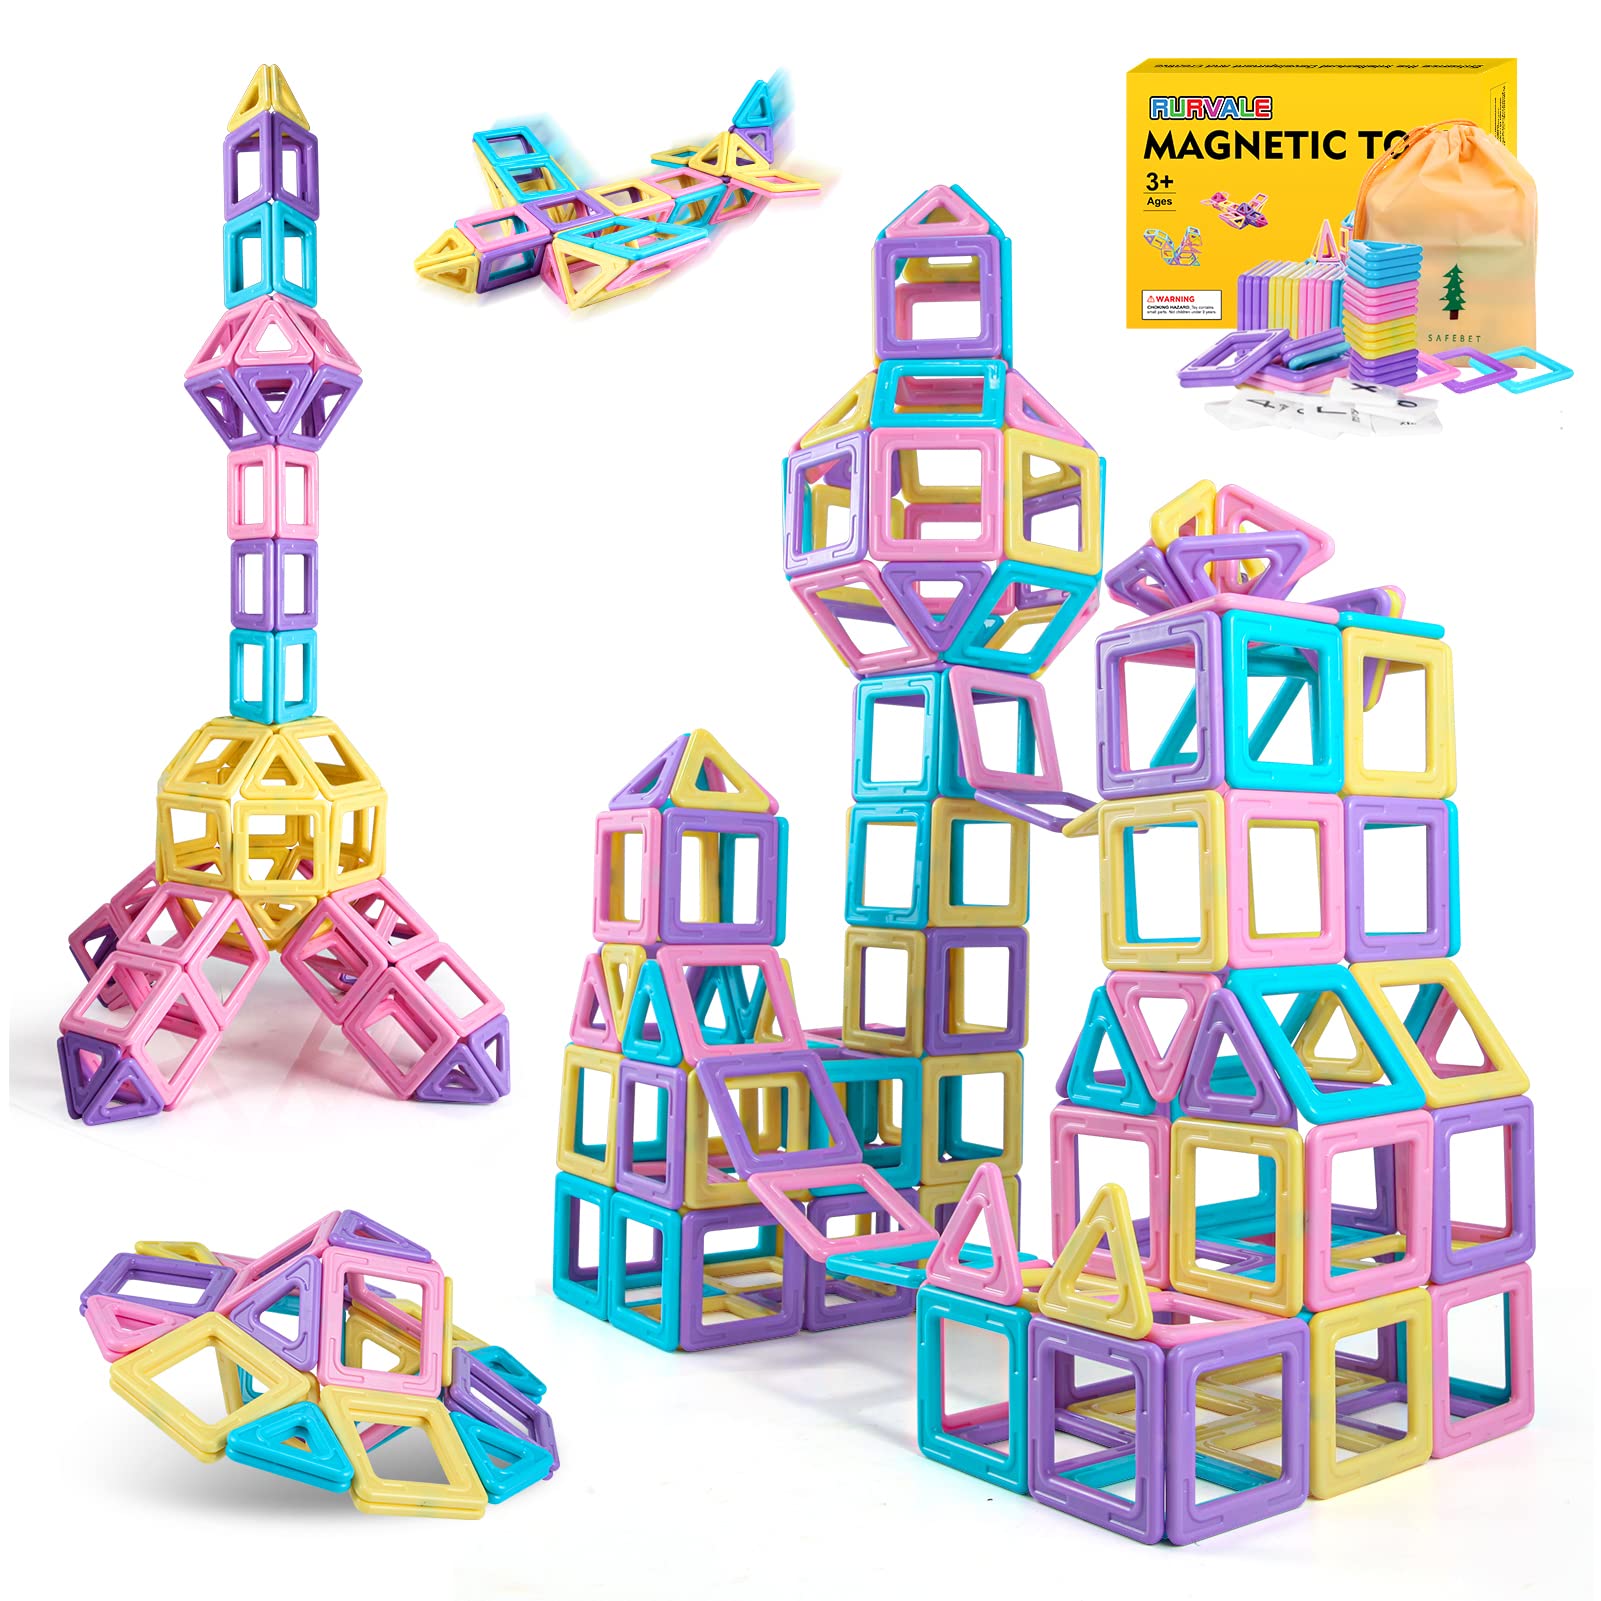 Magnetic Tiles Kids Games Toys